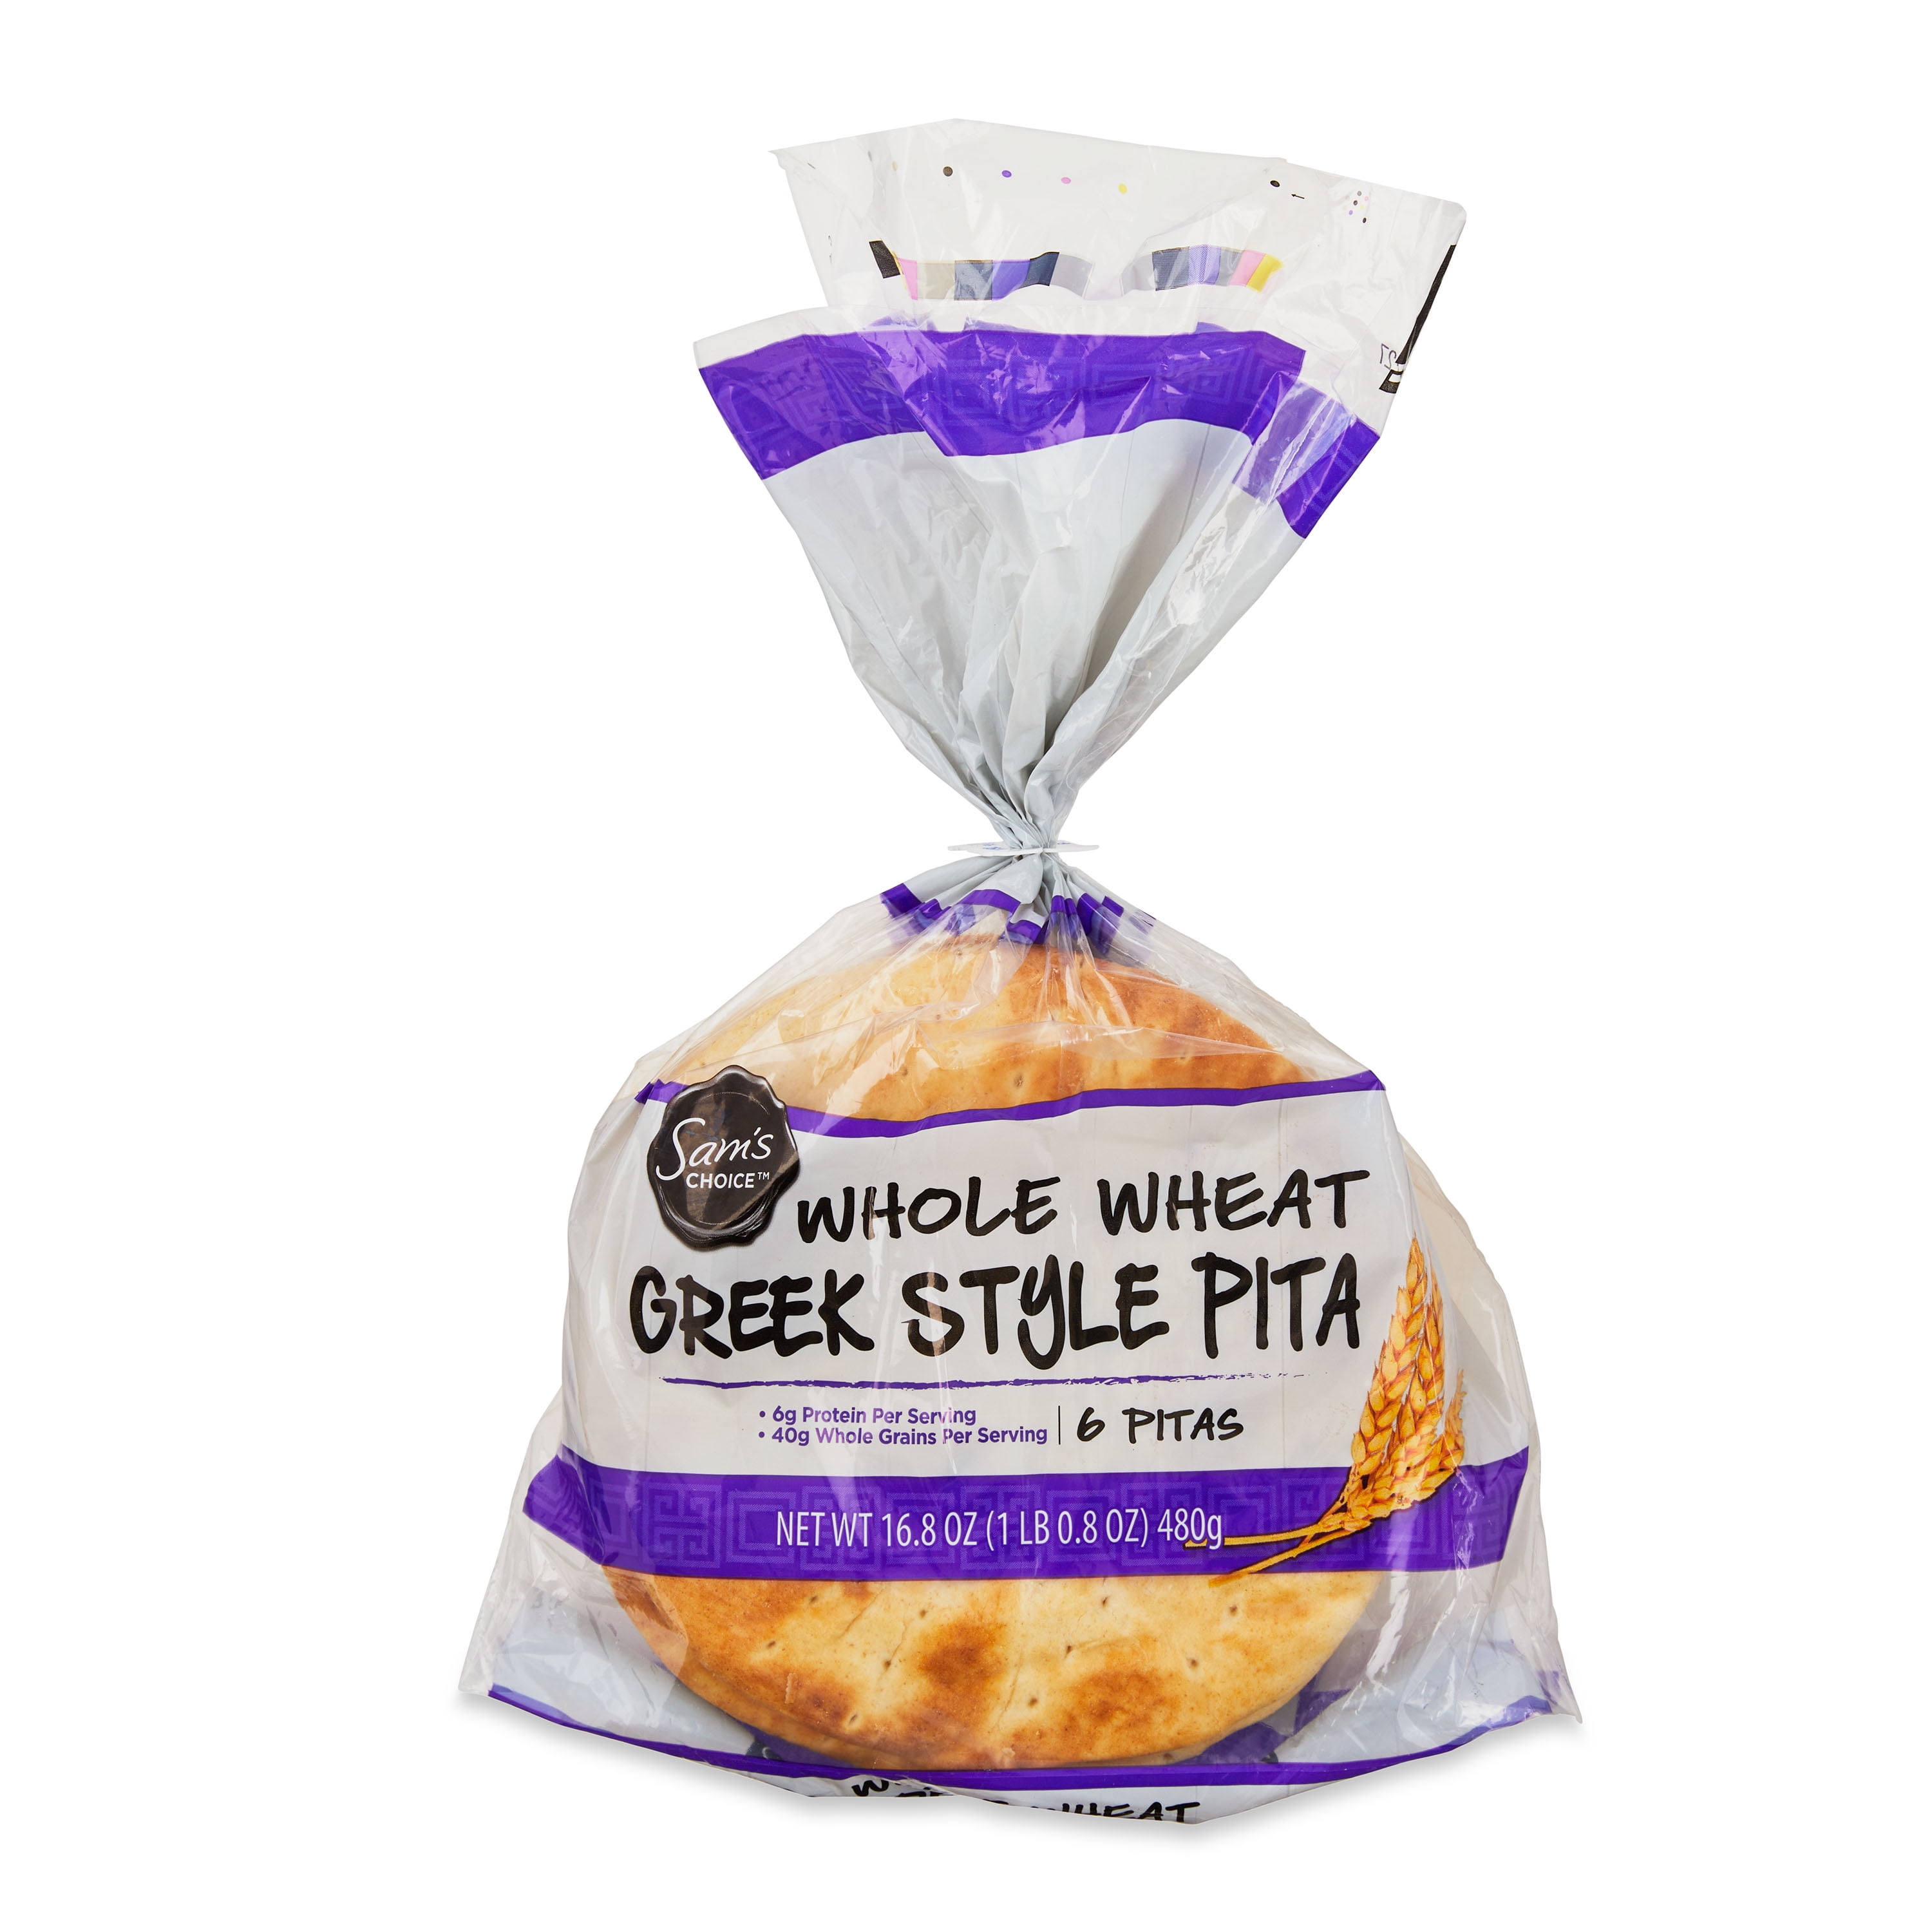 Sam's Choice Whole Wheat Greek Style Pita, 16.8 oz, 6 Count